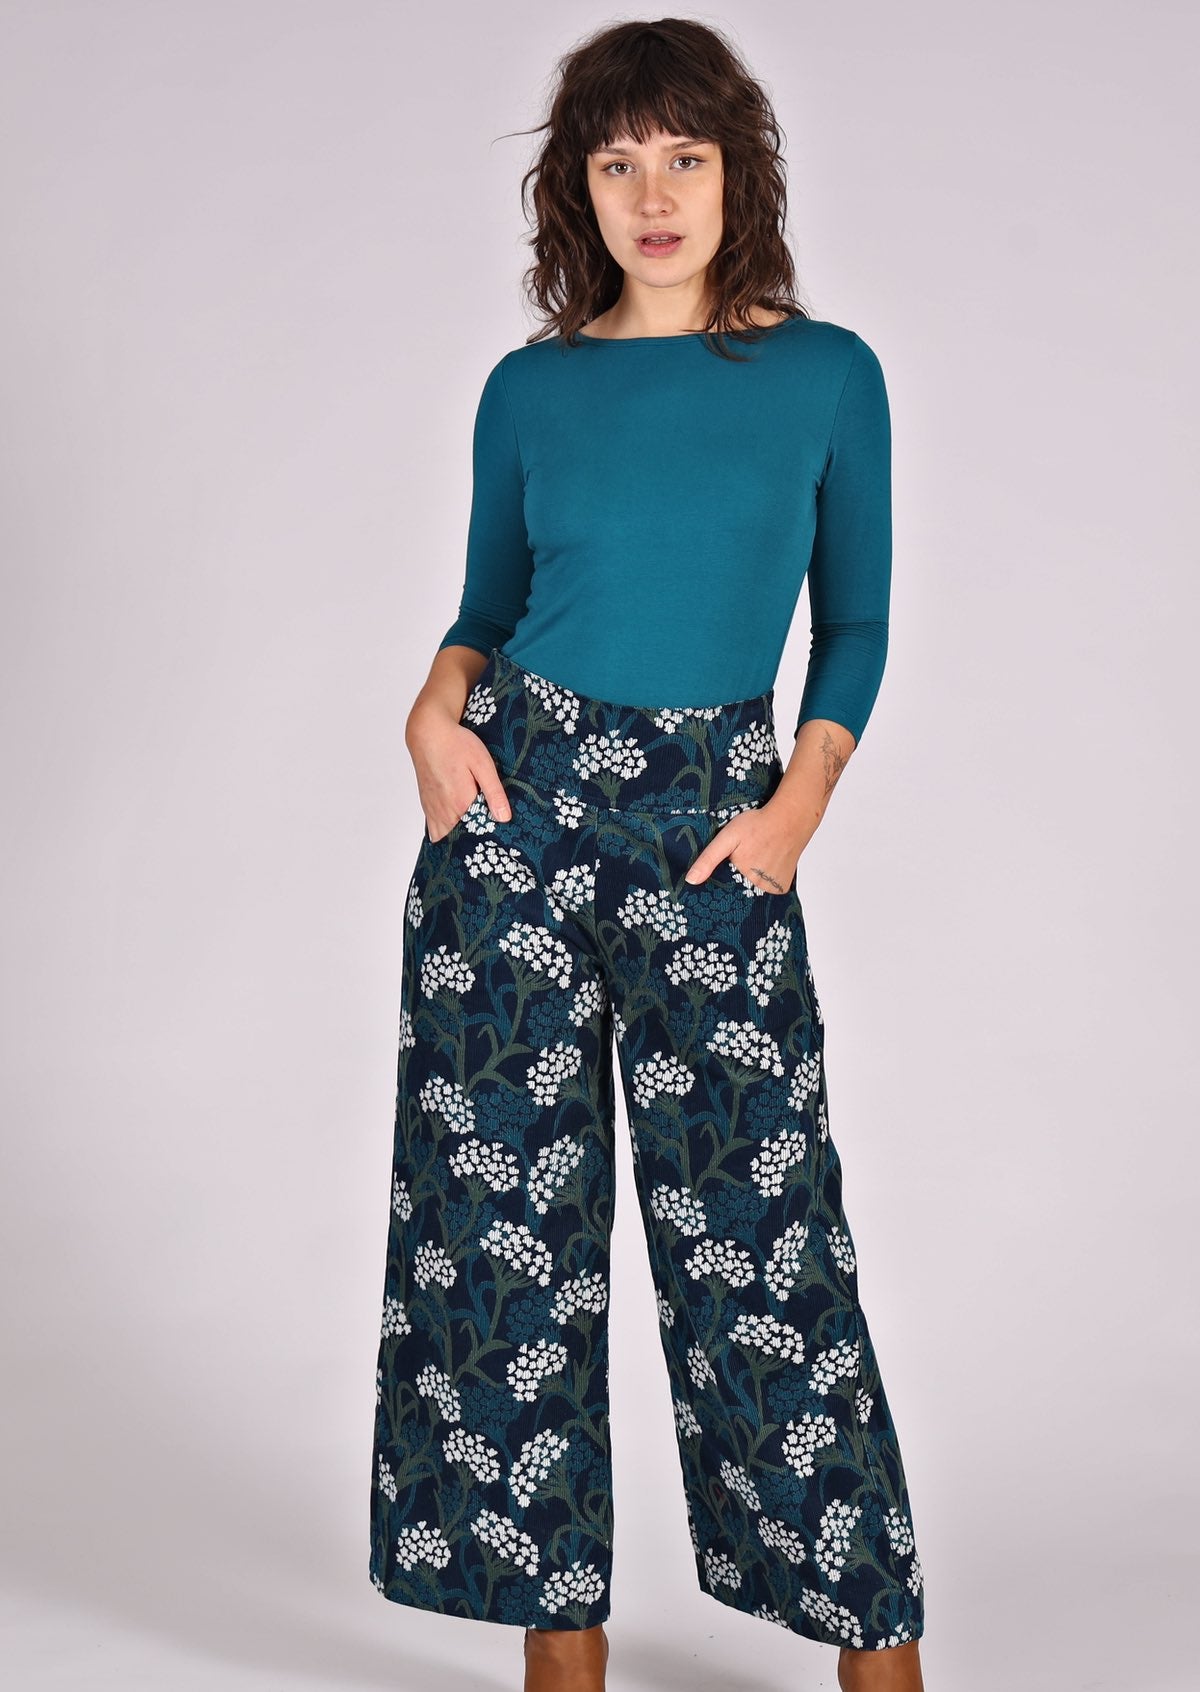 Green and white floral print on blue base cotton corduroy wide leg pants